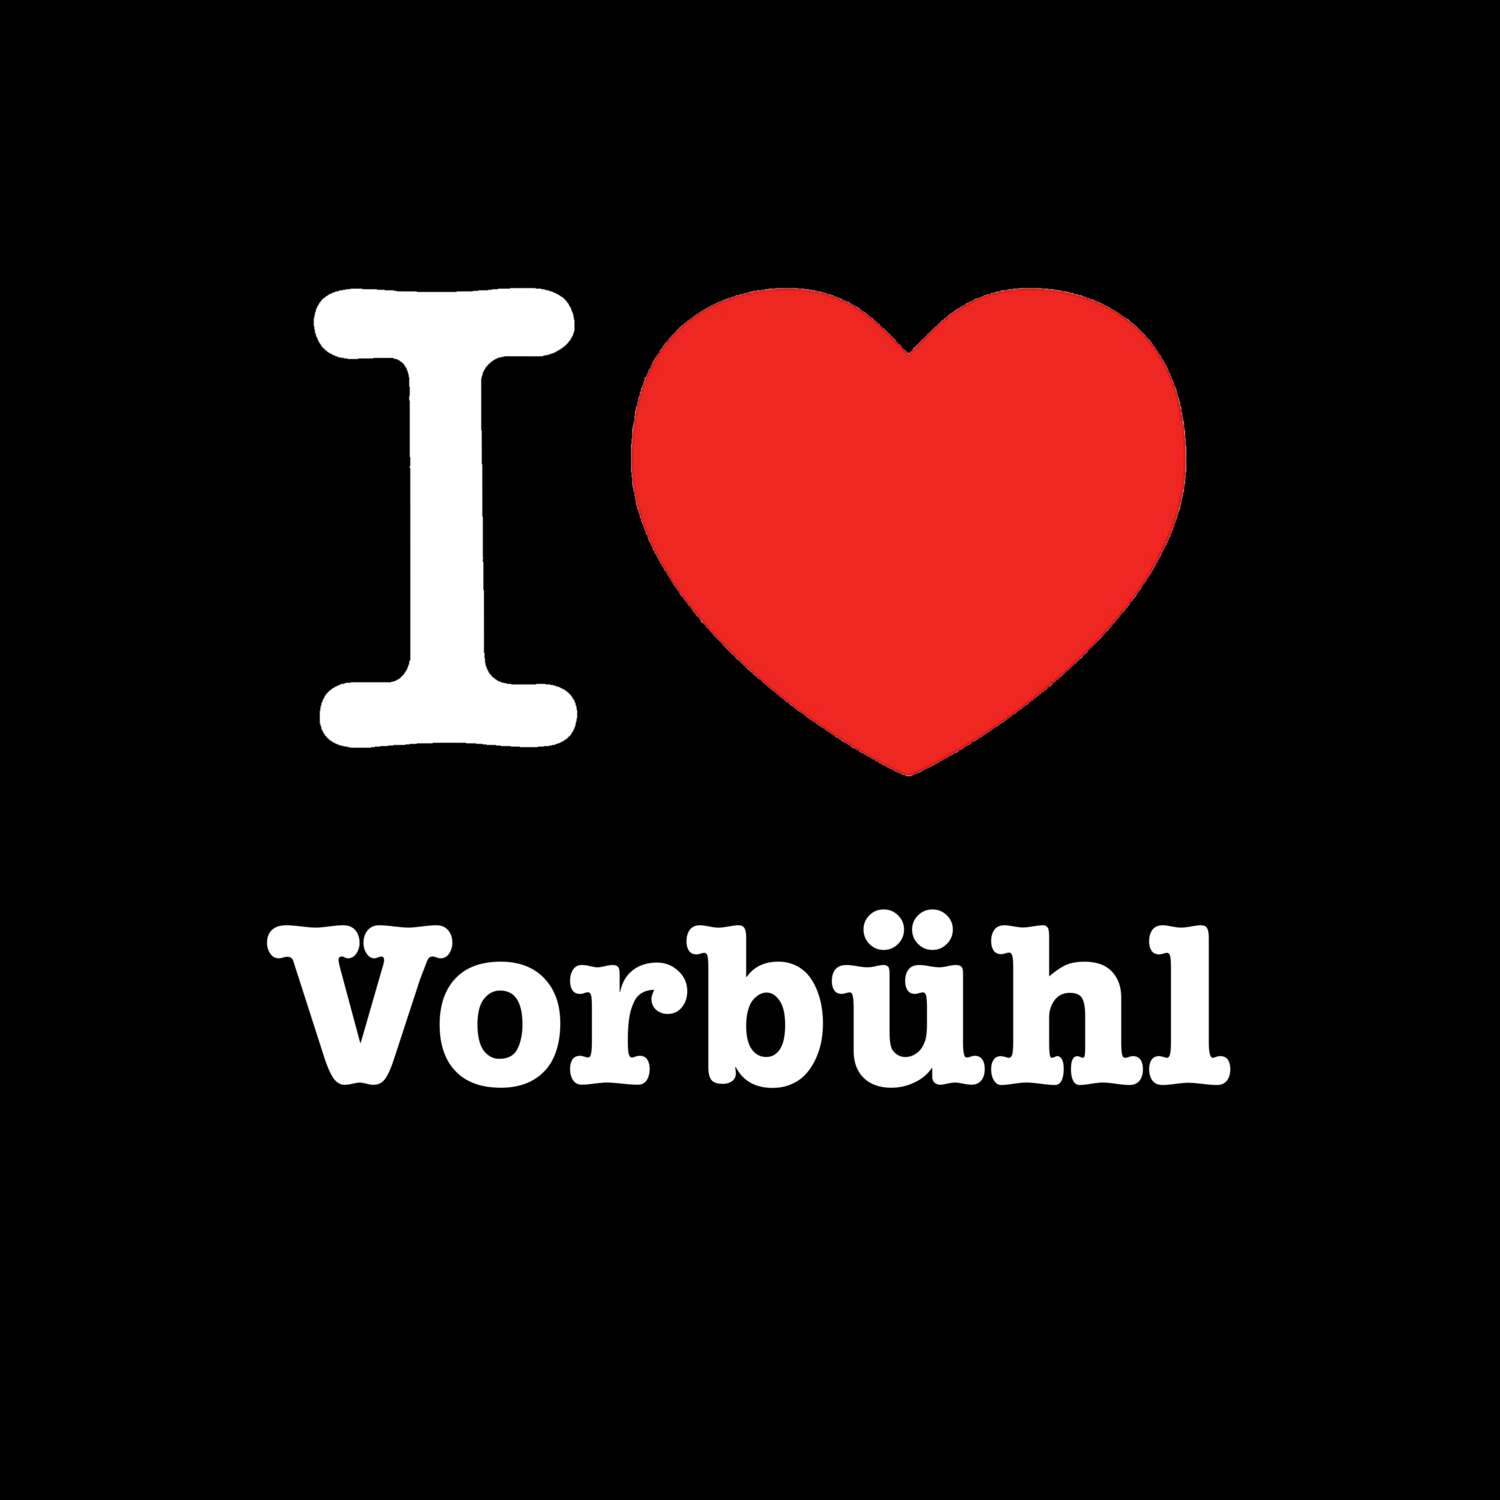 Vorbühl T-Shirt »I love«